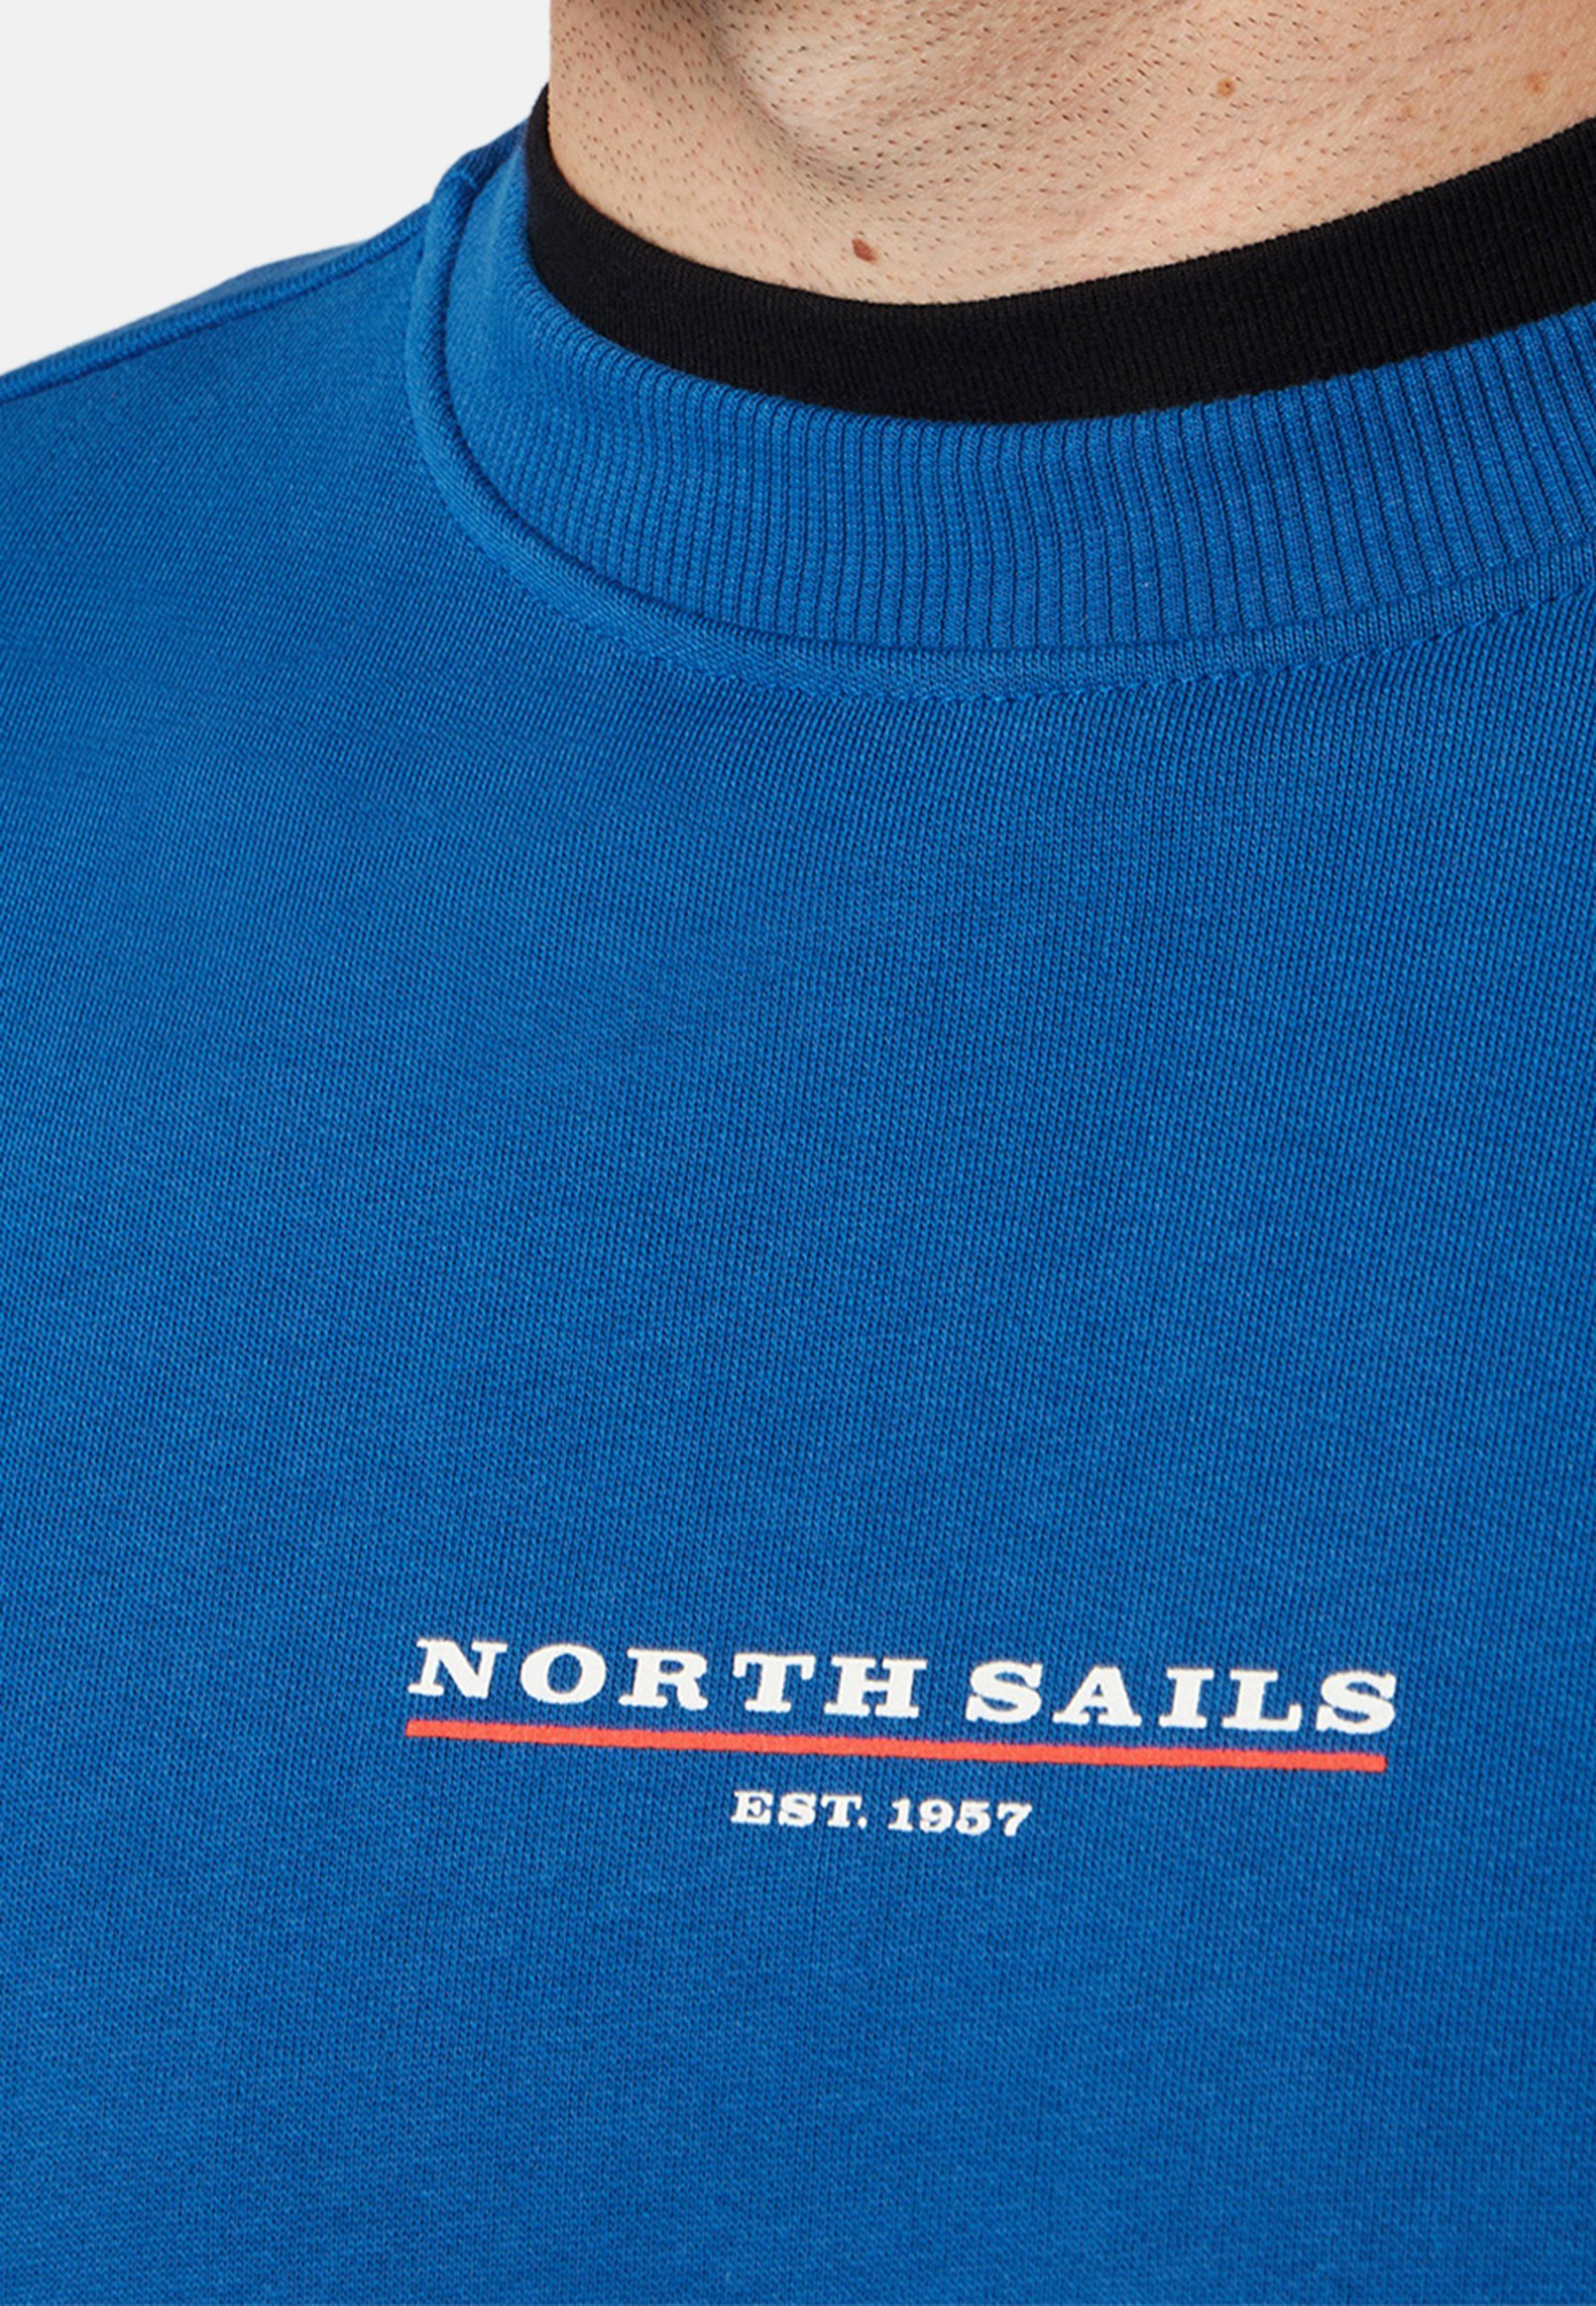 Brust-Print North Sails Fleecepullover Sweatshirt BLUE mit